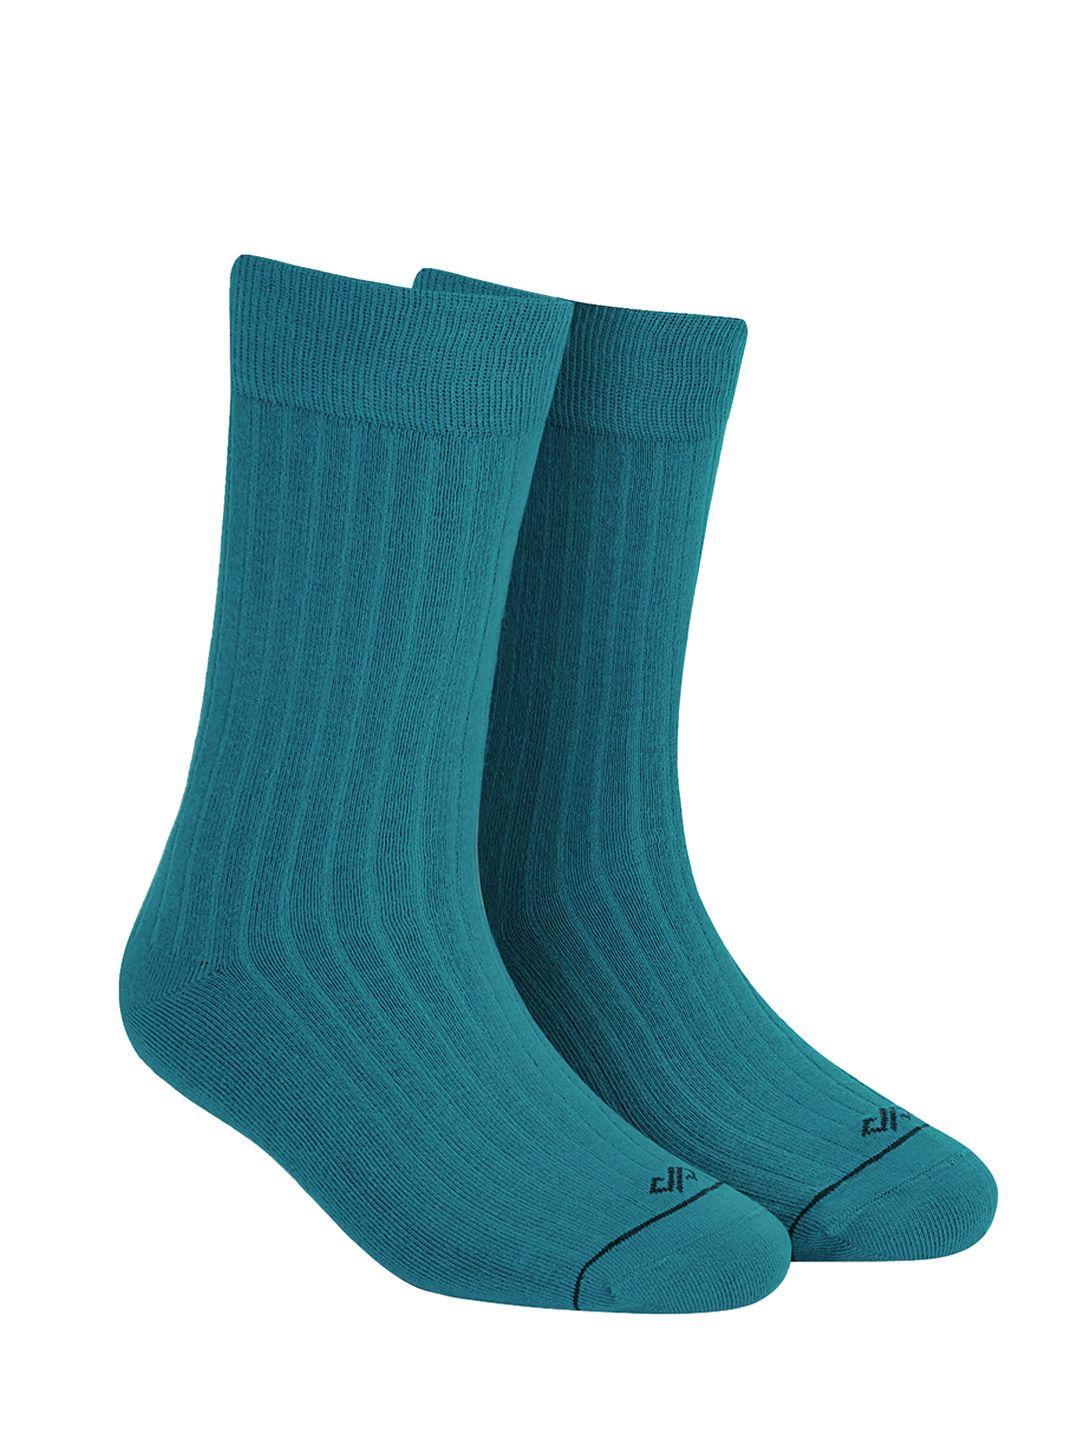 dynamocks unisex teal green solid calf-length anti bacterial crew socks